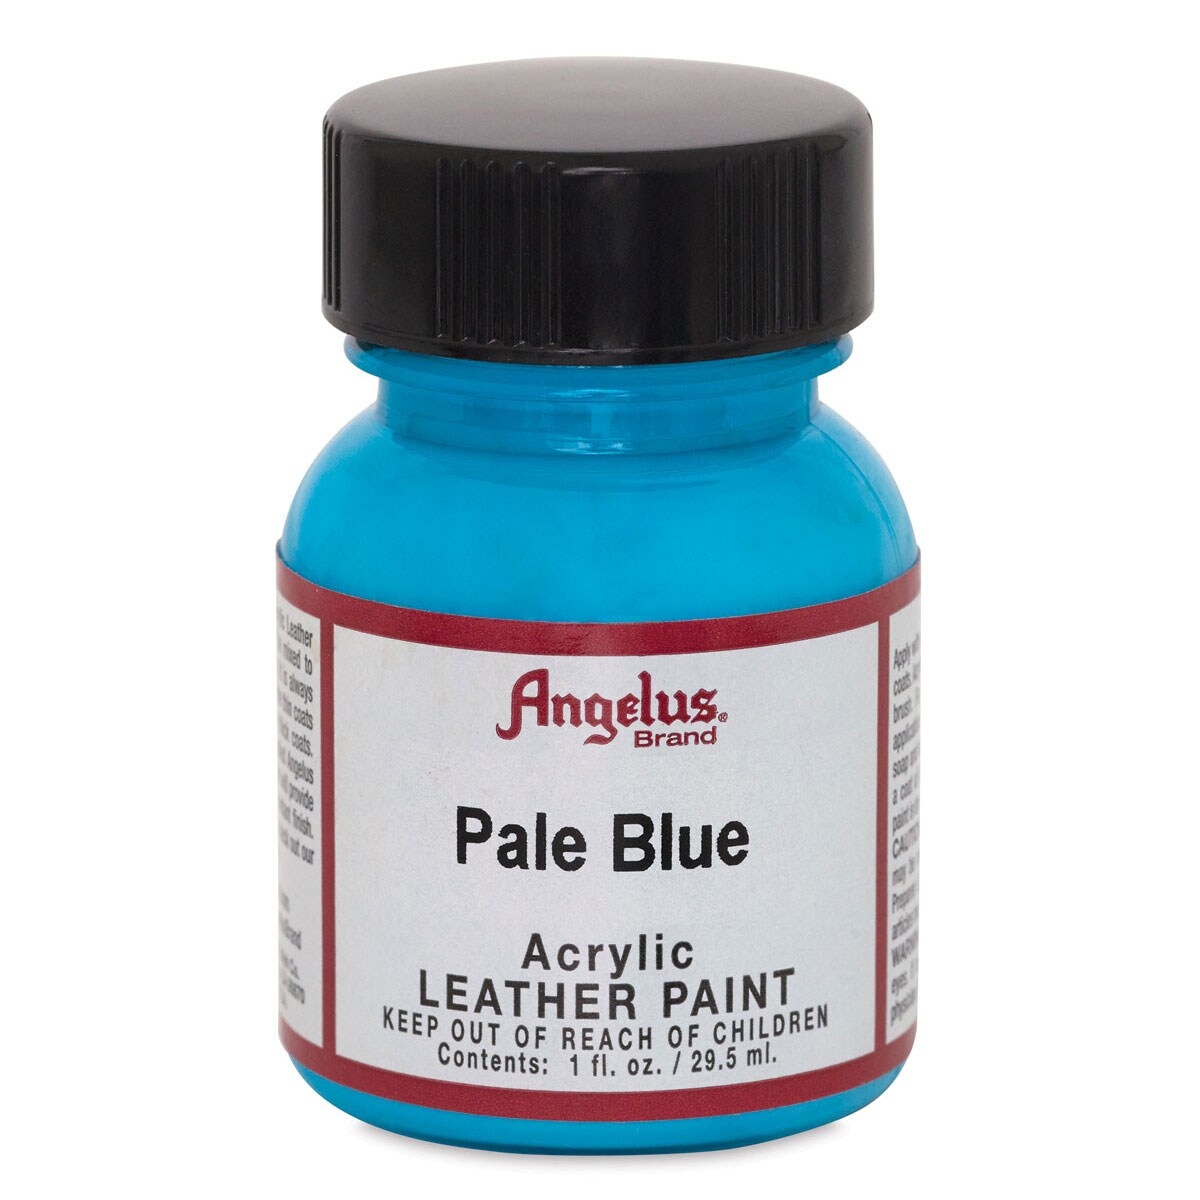 Angelus Acrylic Leather Paint Pale Blue 1 oz.